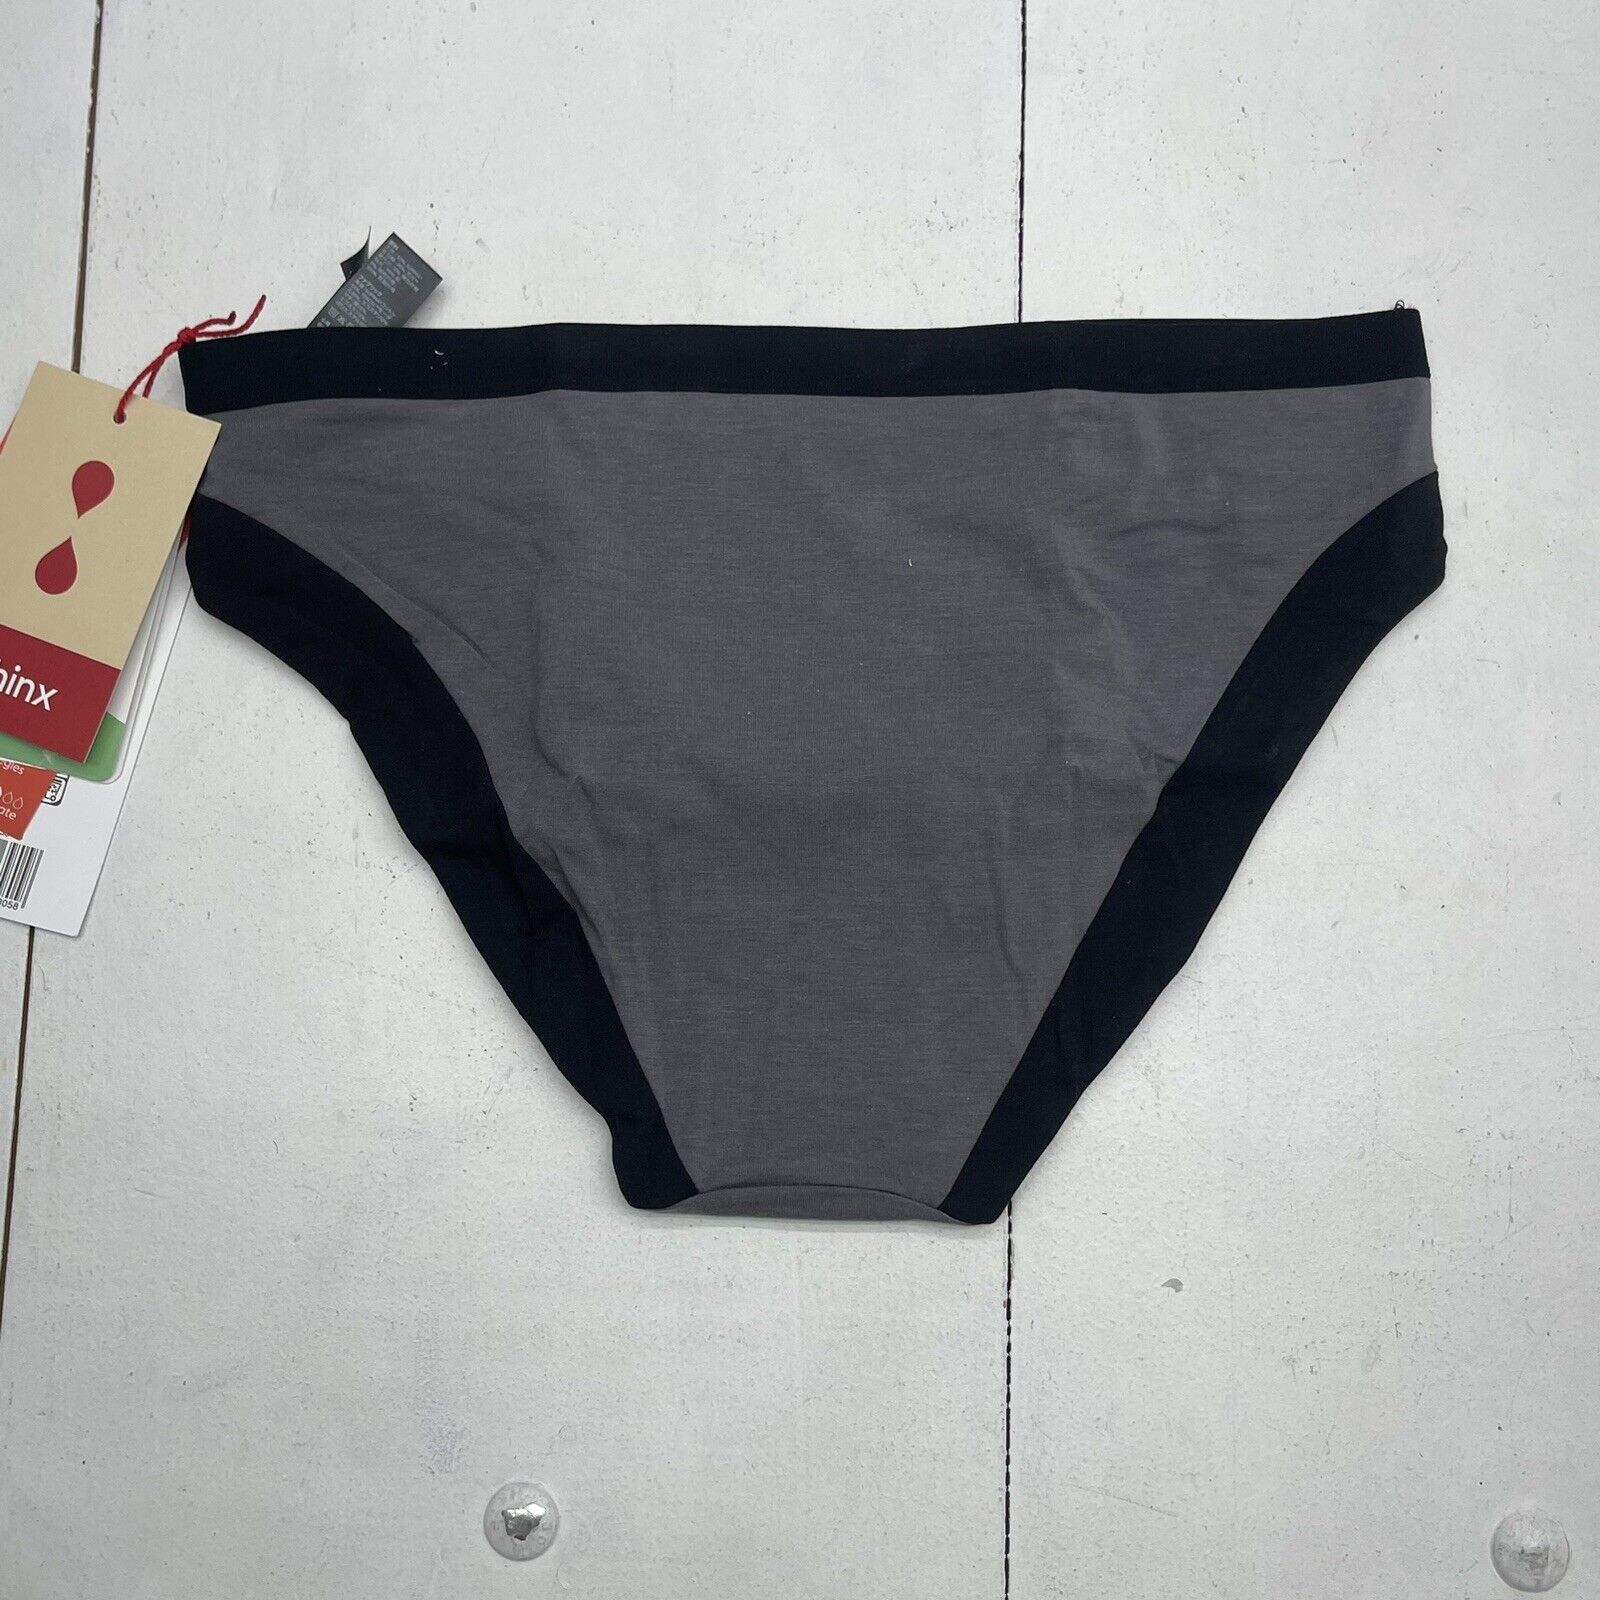 Thinx Slate Gray Period Panties Bikini Moderate Women's Size Medium Ne -  beyond exchange